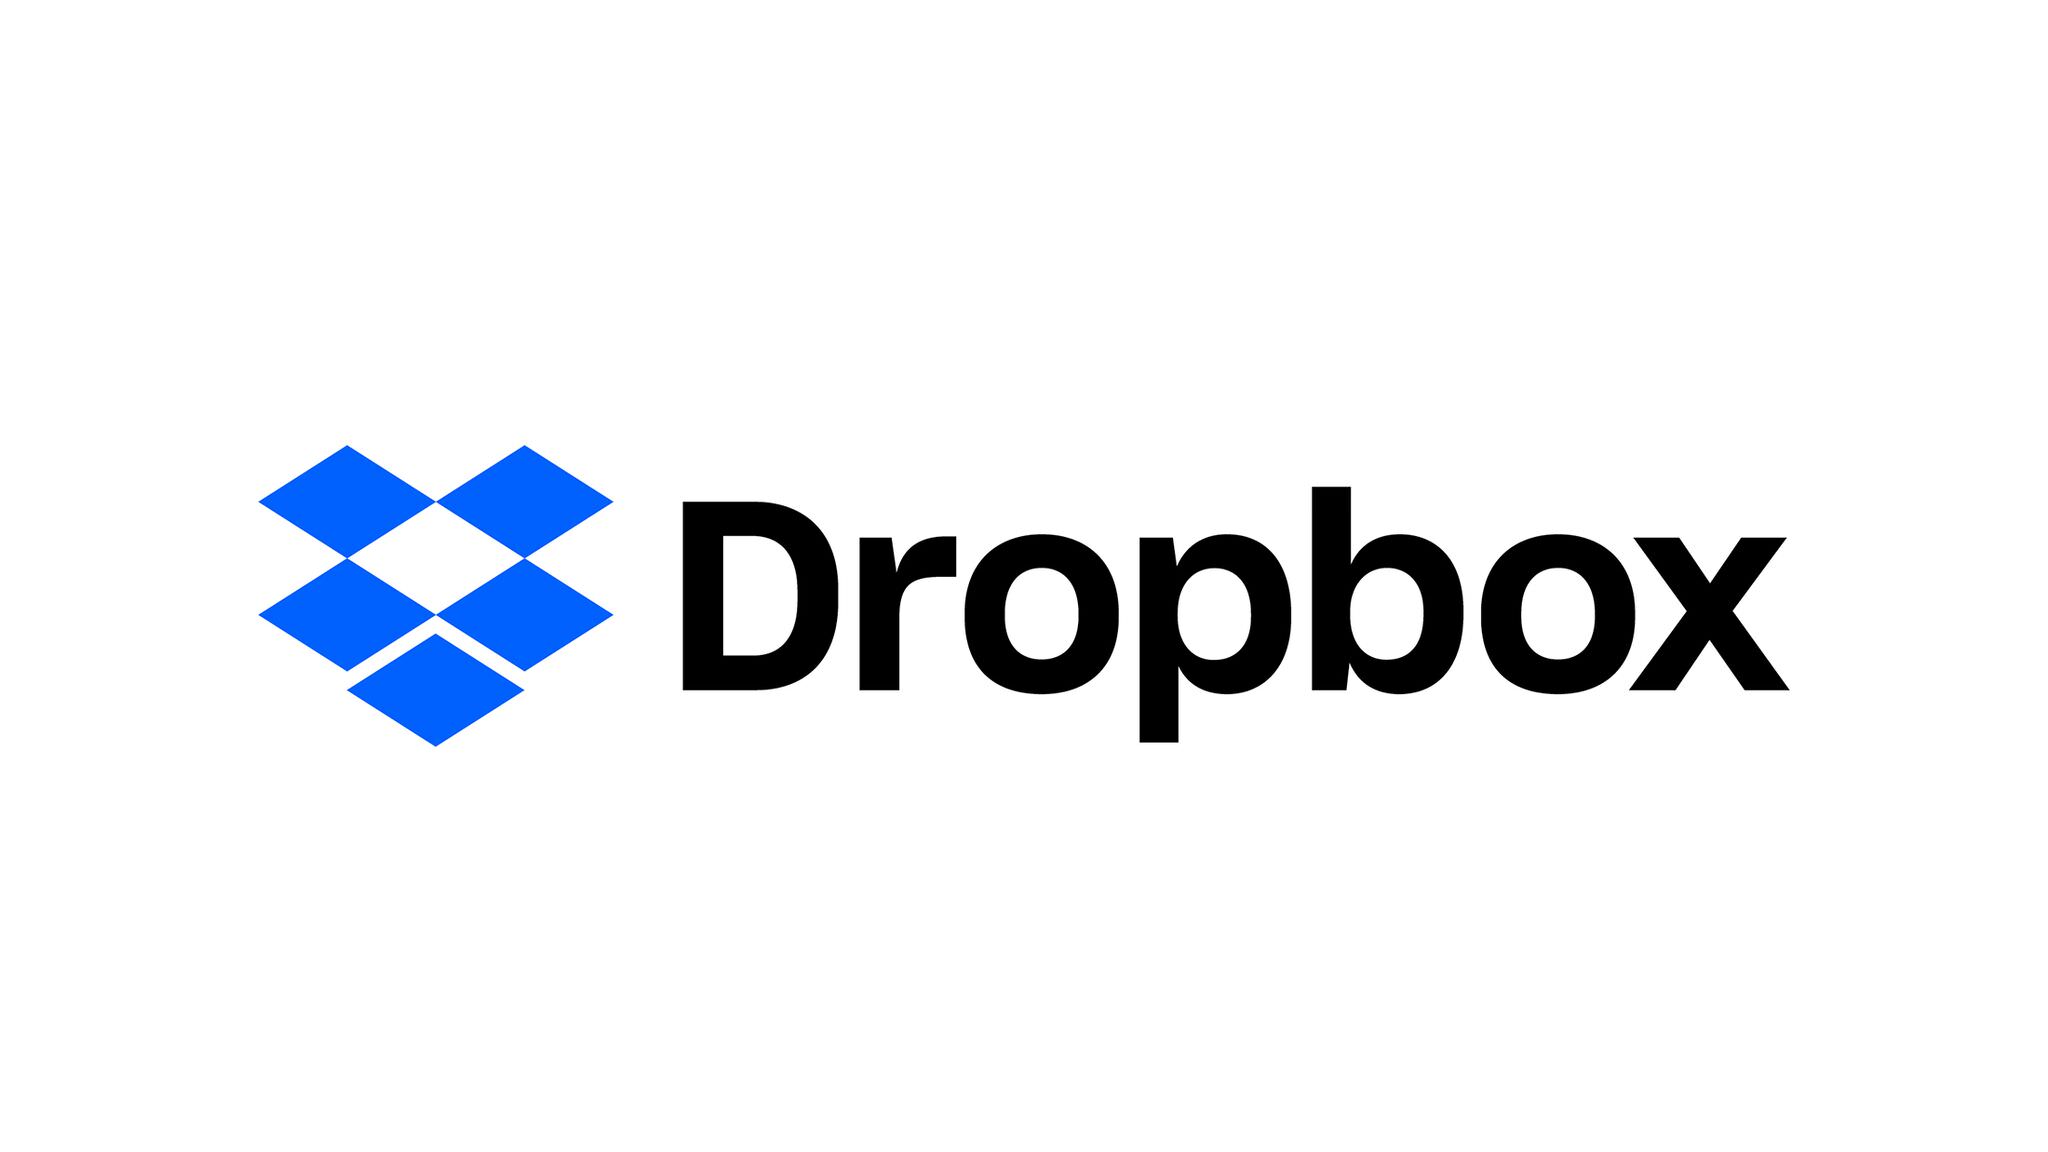 alt="Dropbox"